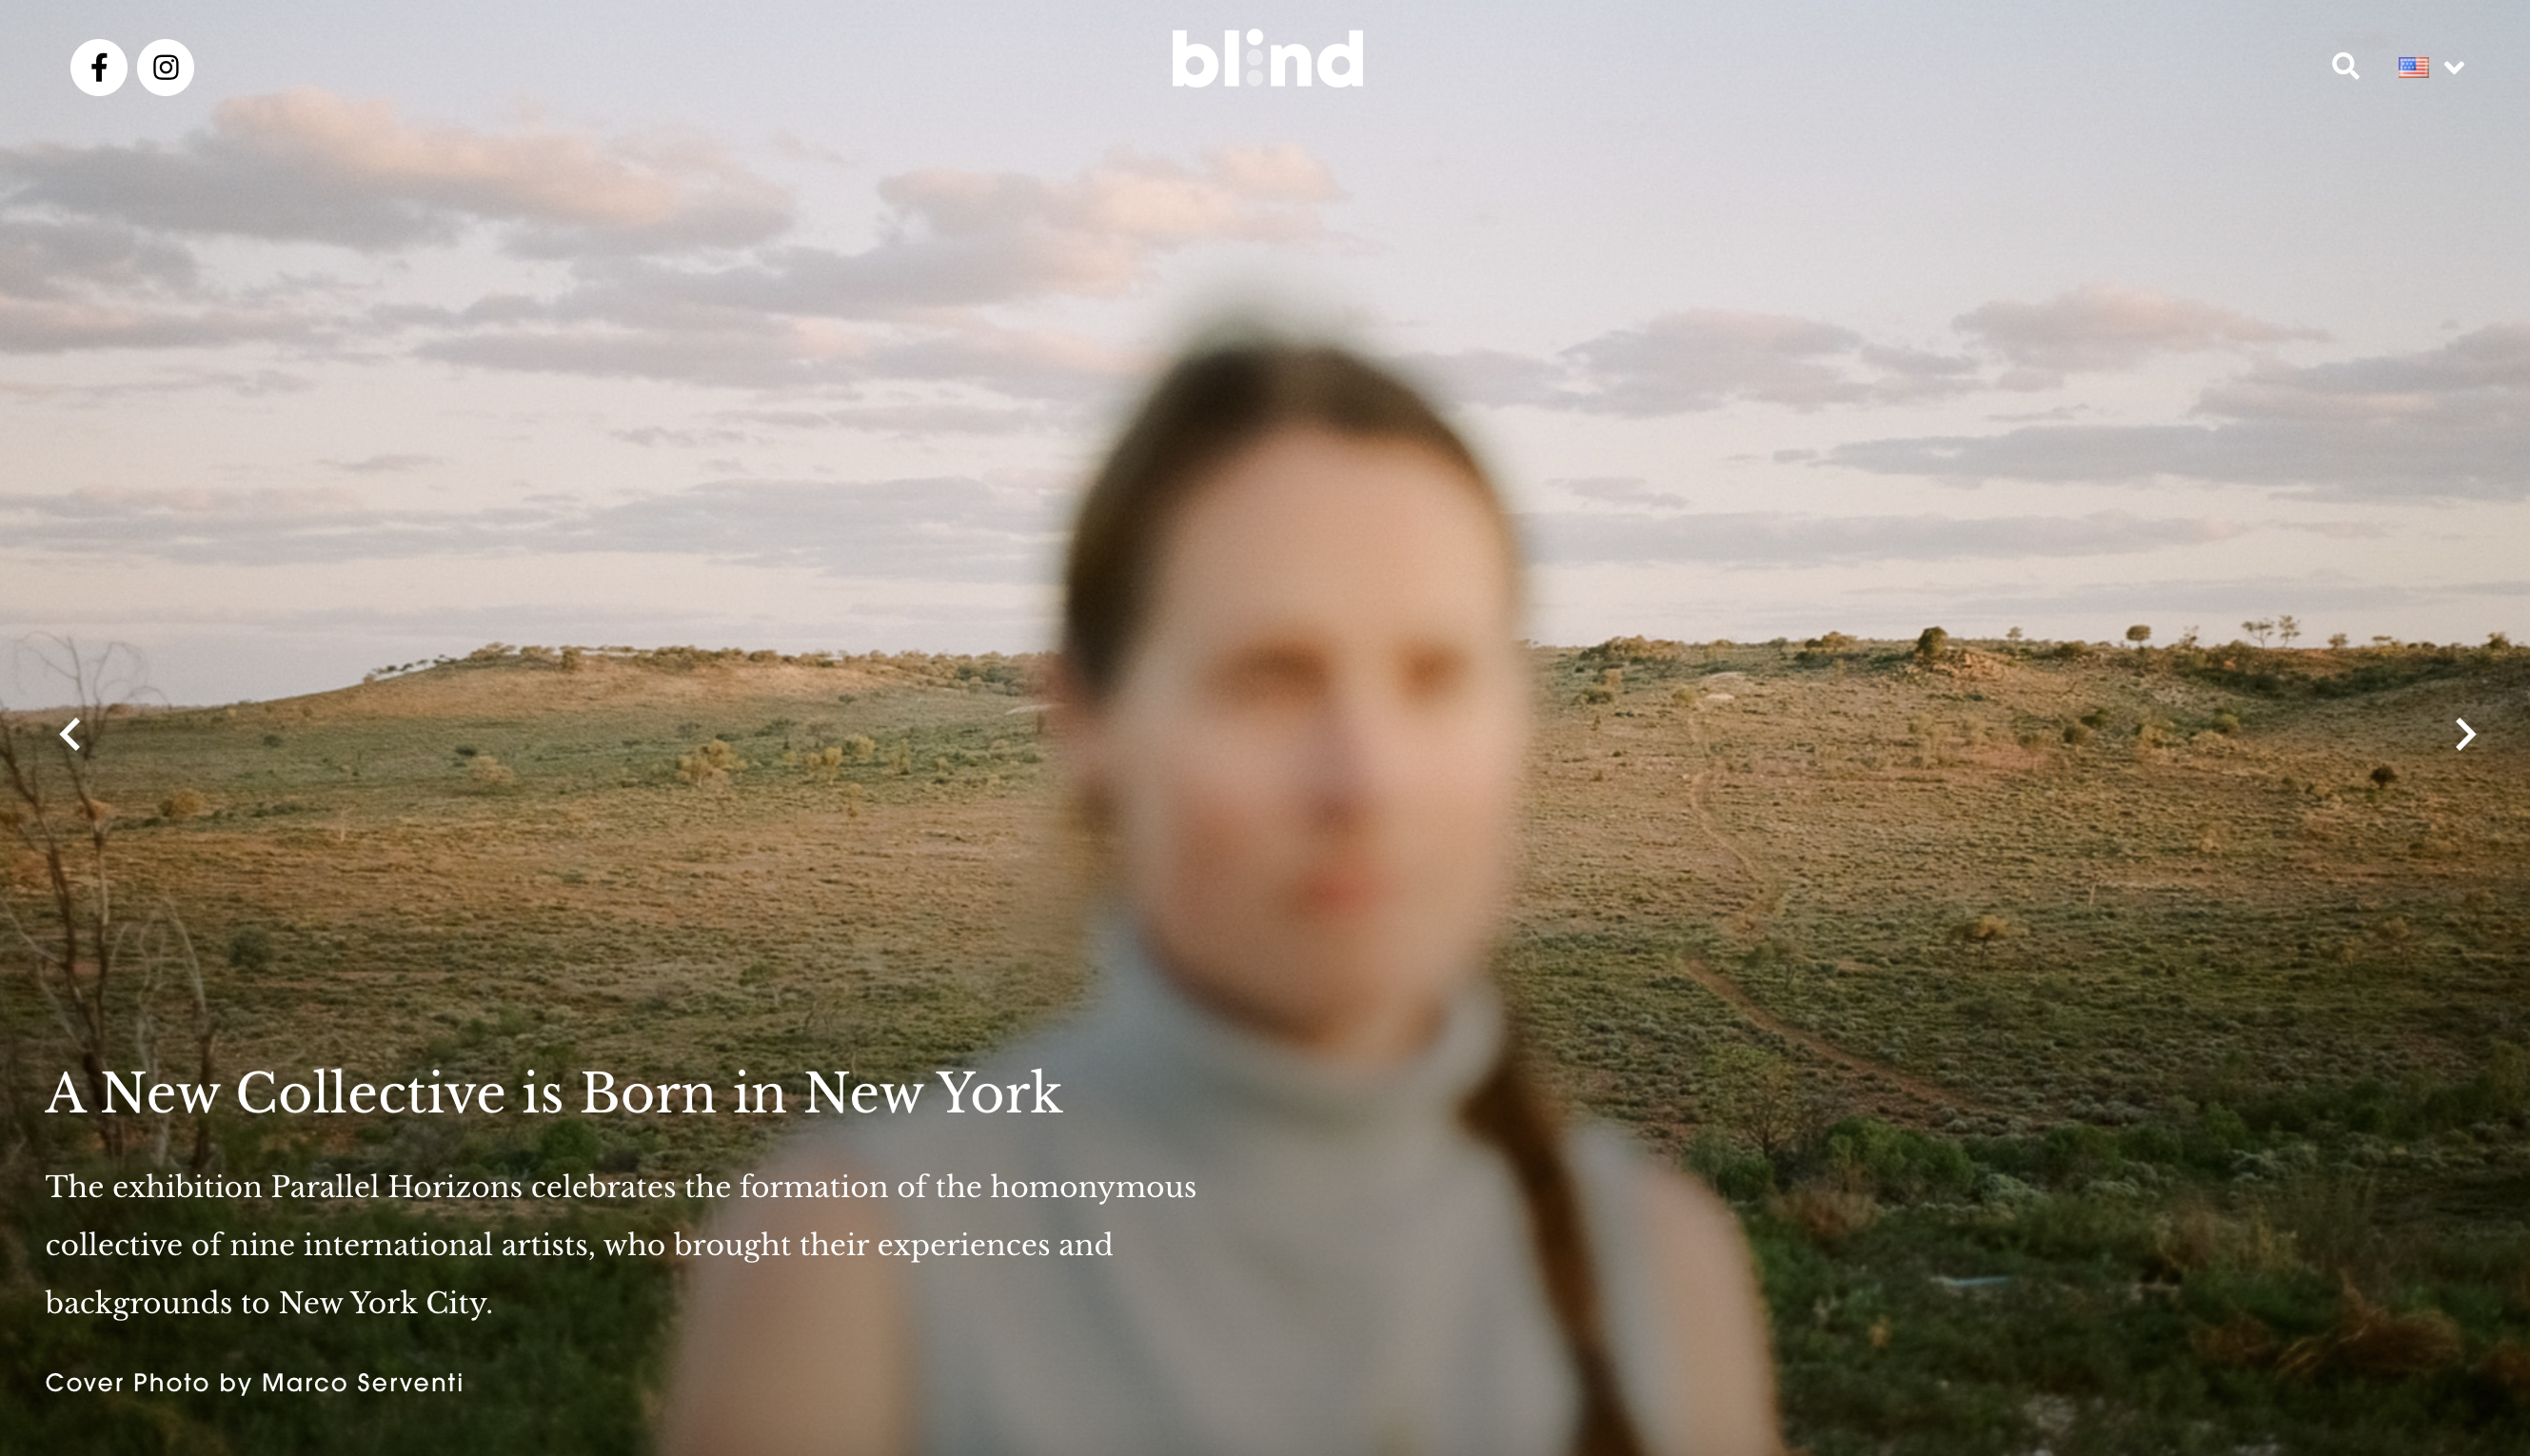 Blind Magazine Features Parallel Horizons Exhibition 